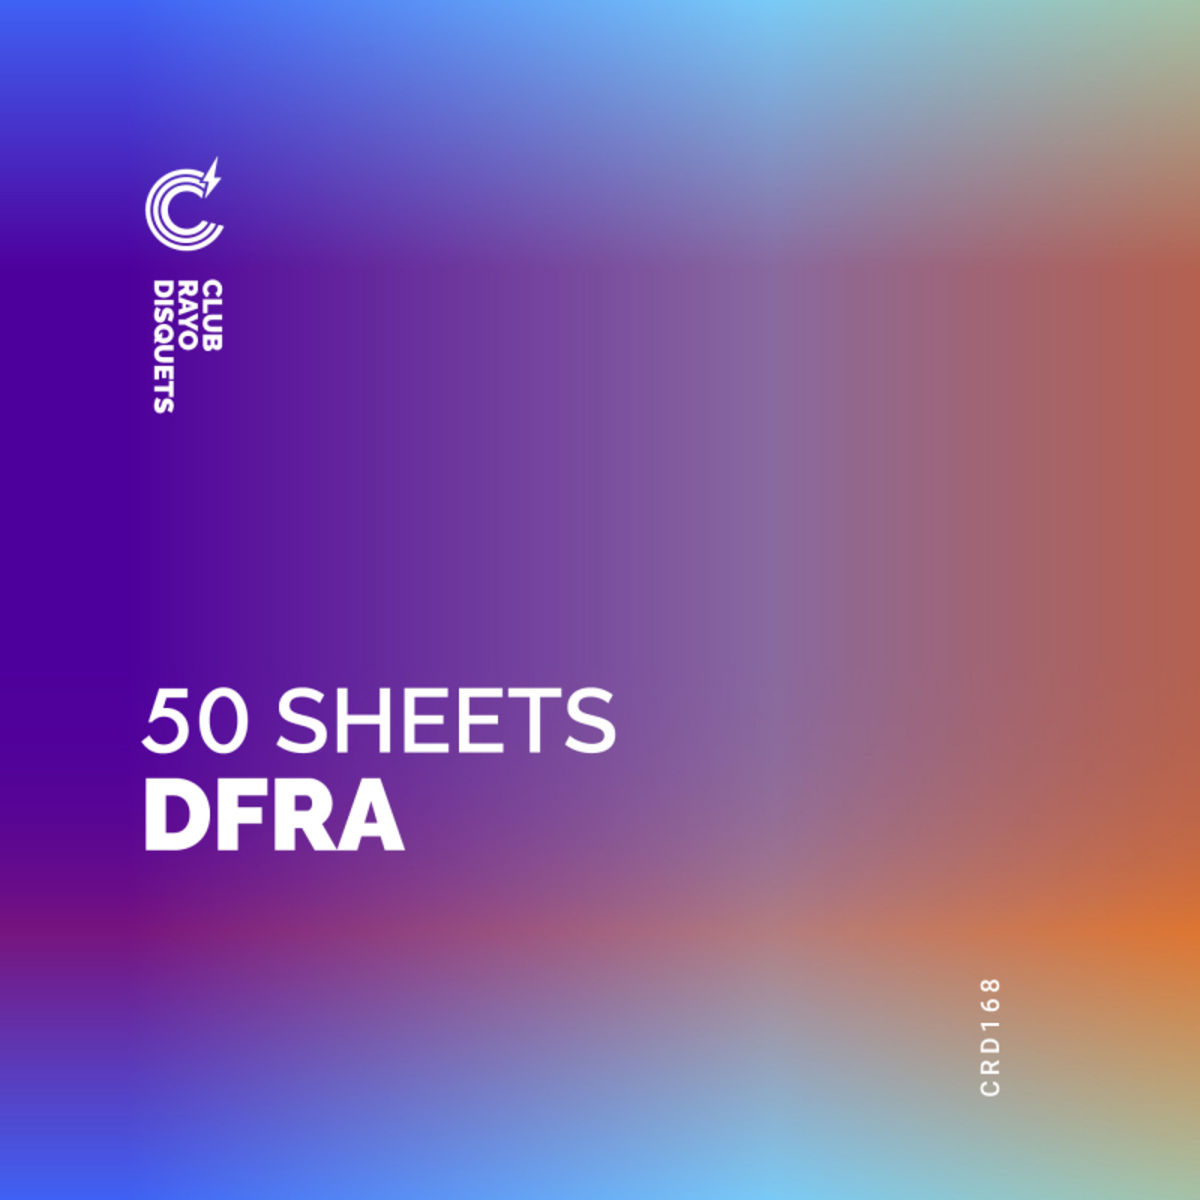 DFRA - 50 sheets / Club Rayo Disquets